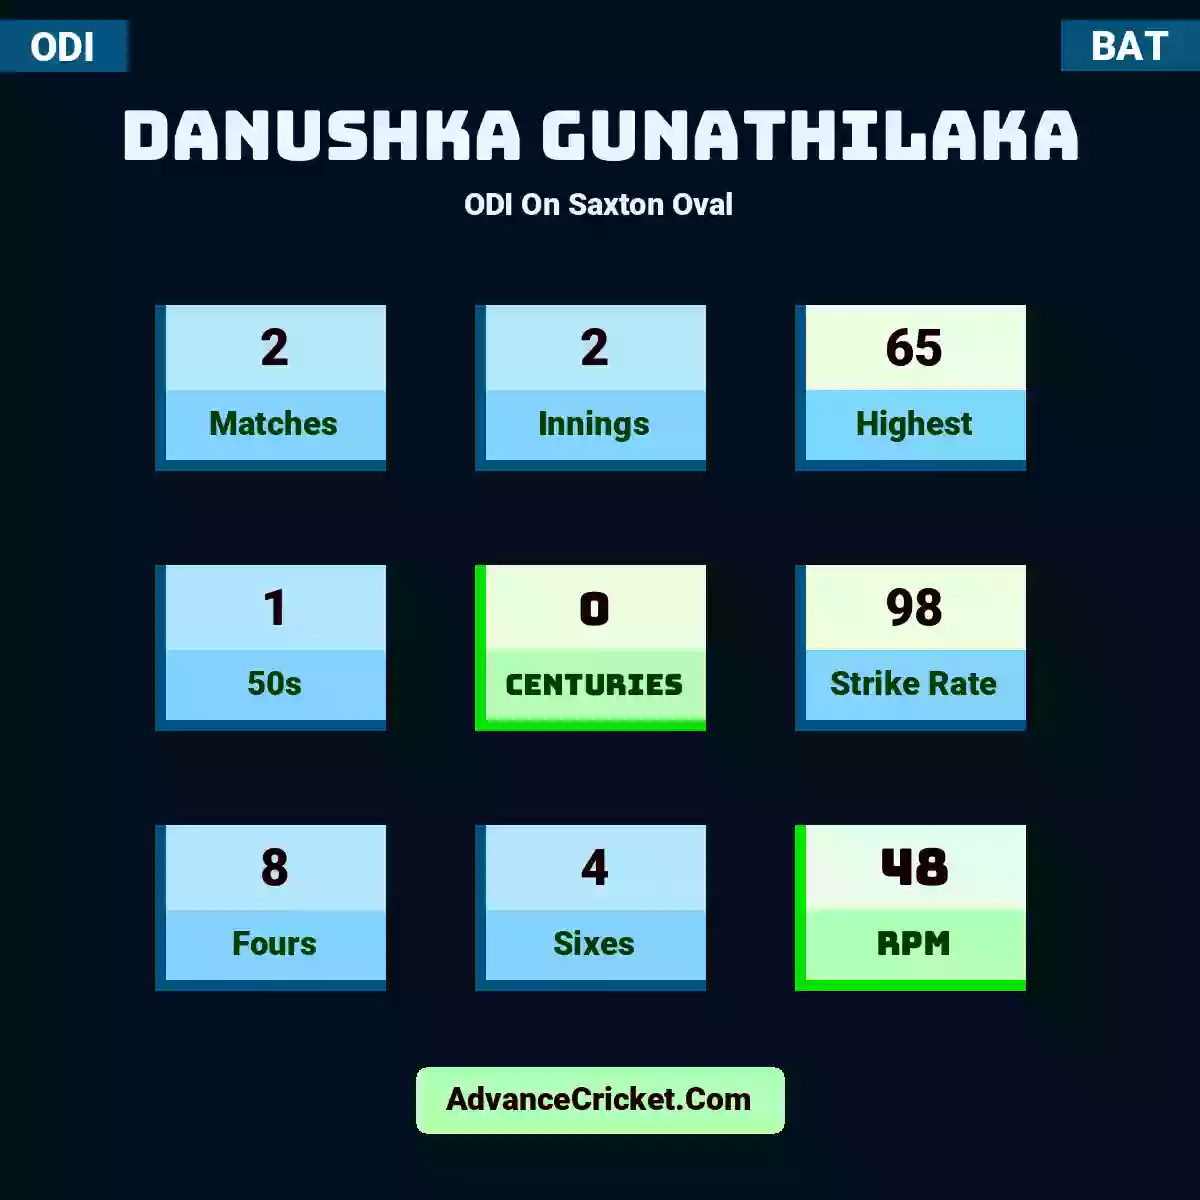 Danushka Gunathilaka ODI  On Saxton Oval, Danushka Gunathilaka played 2 matches, scored 65 runs as highest, 1 half-centuries, and 0 centuries, with a strike rate of 98. D.Gunathilaka hit 8 fours and 4 sixes, with an RPM of 48.